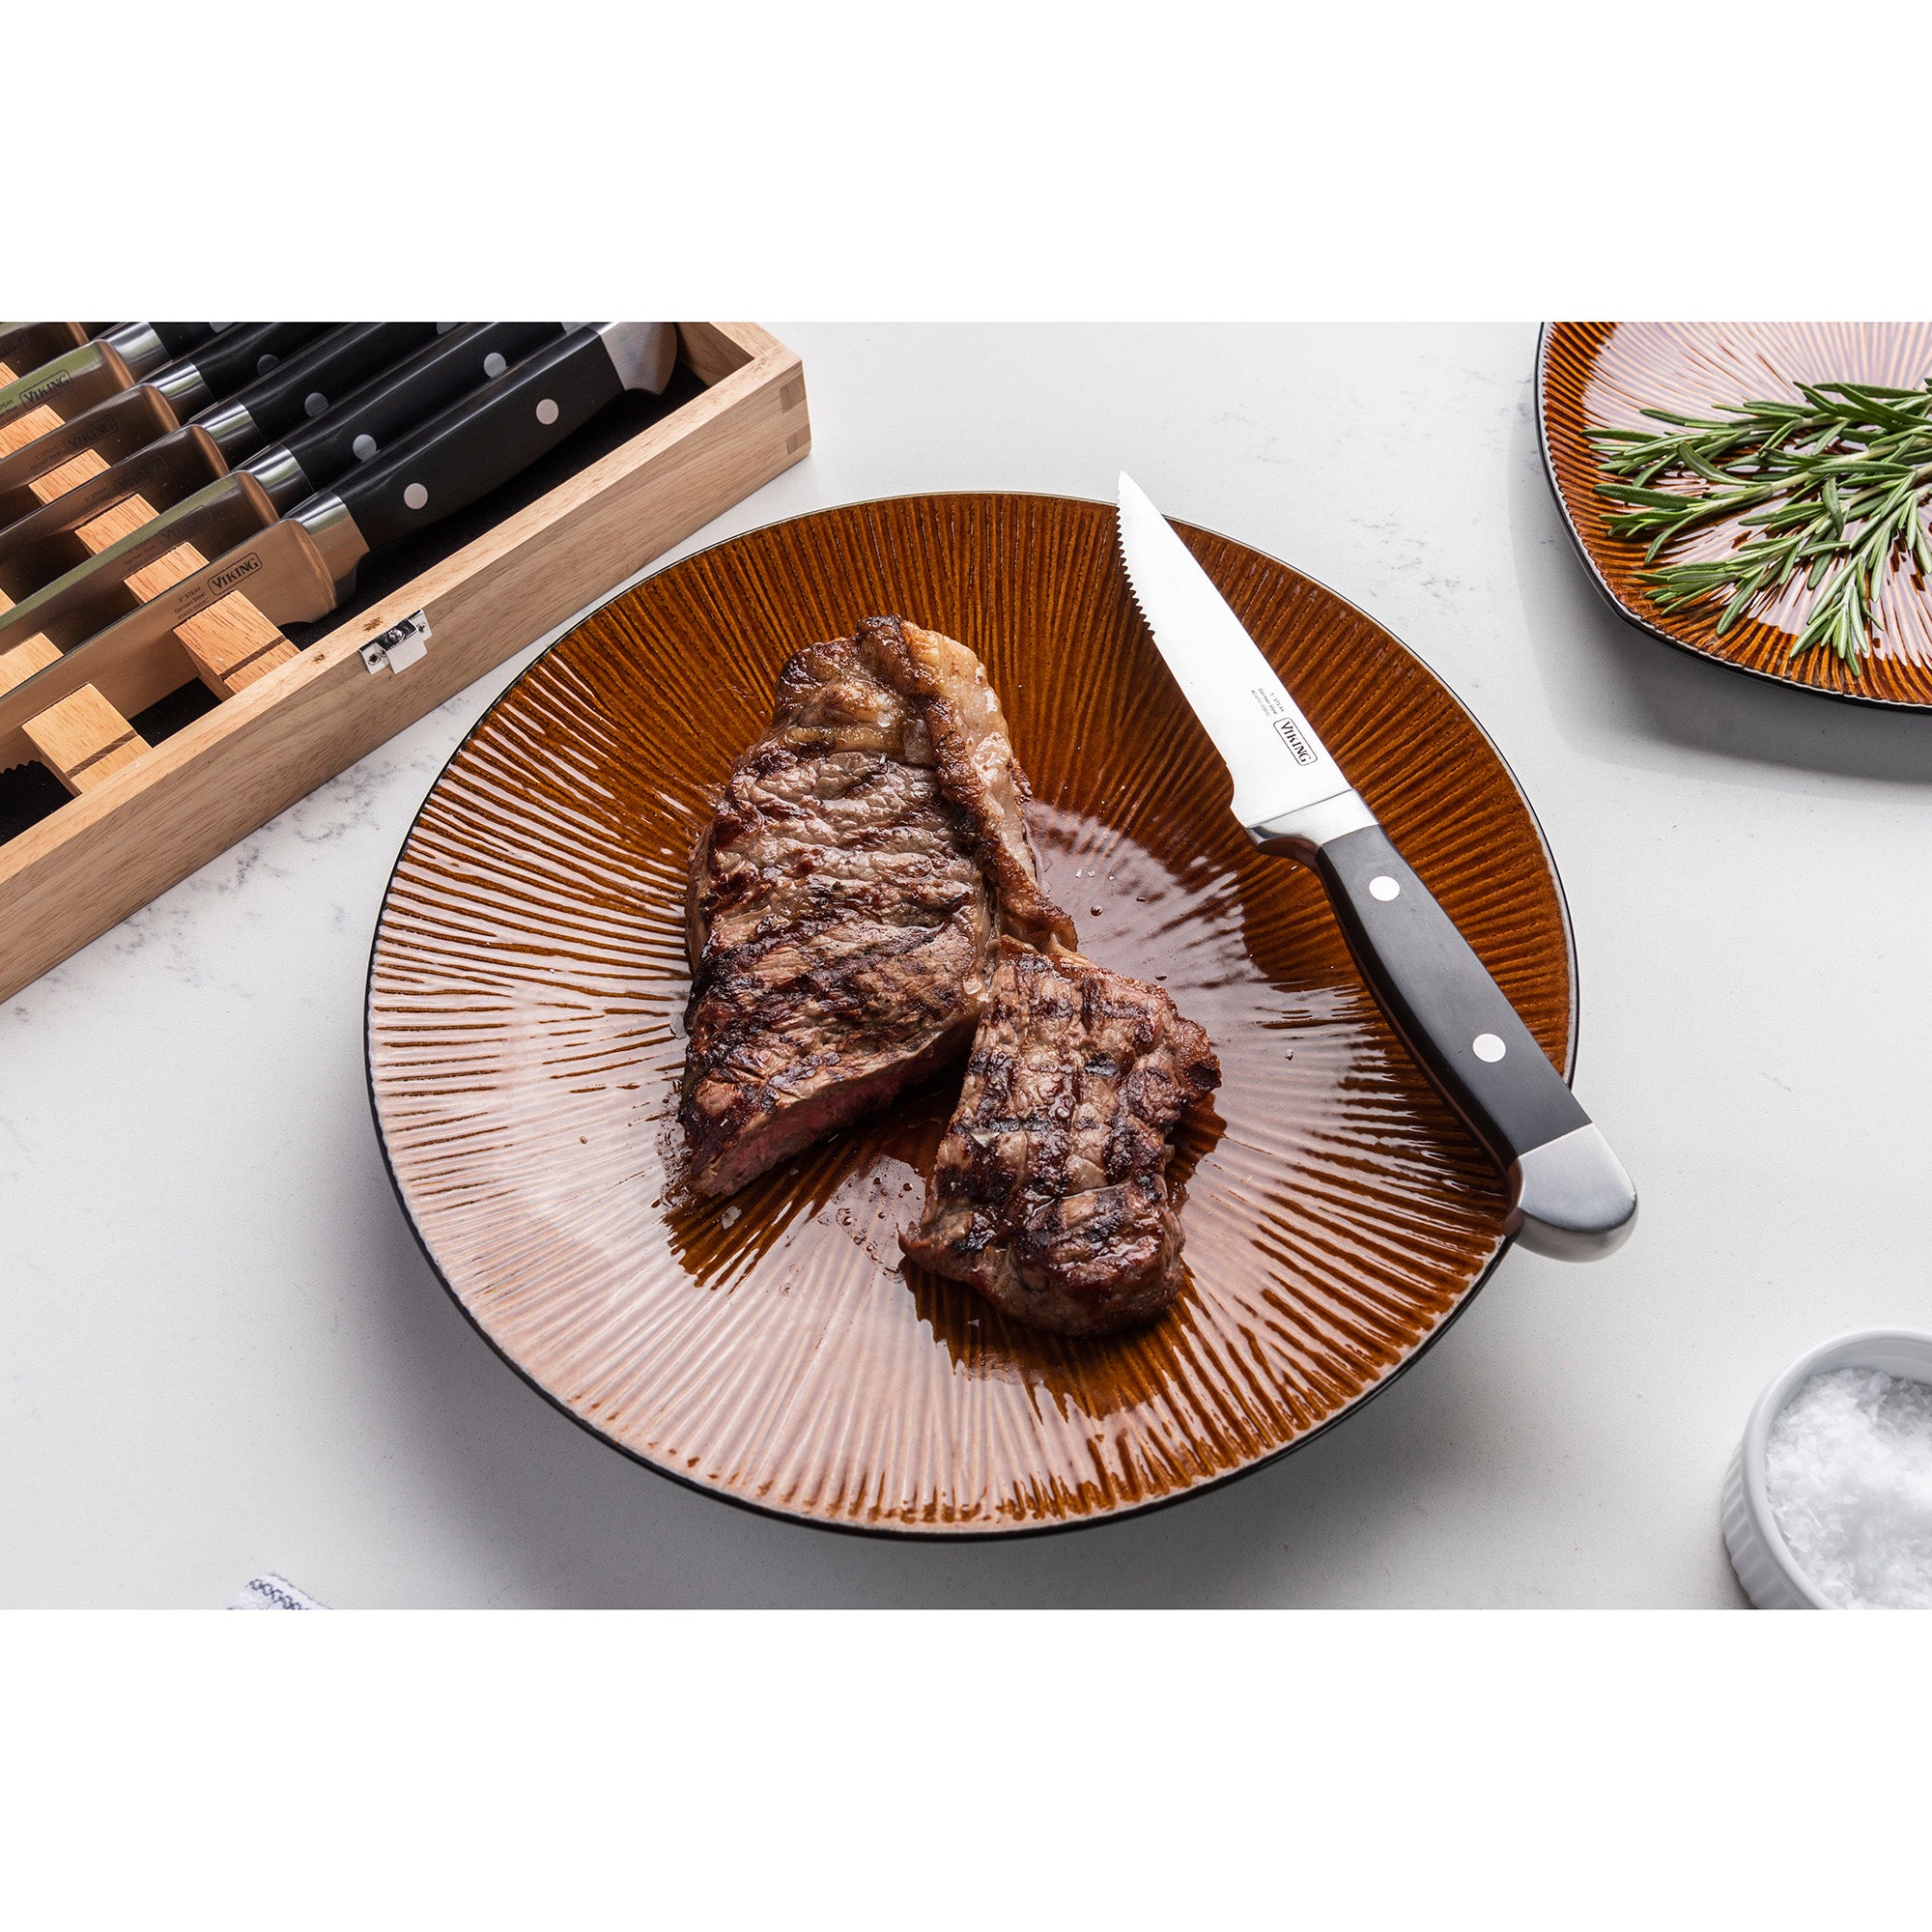 Recommendation? - Looking for a decent steak knife set